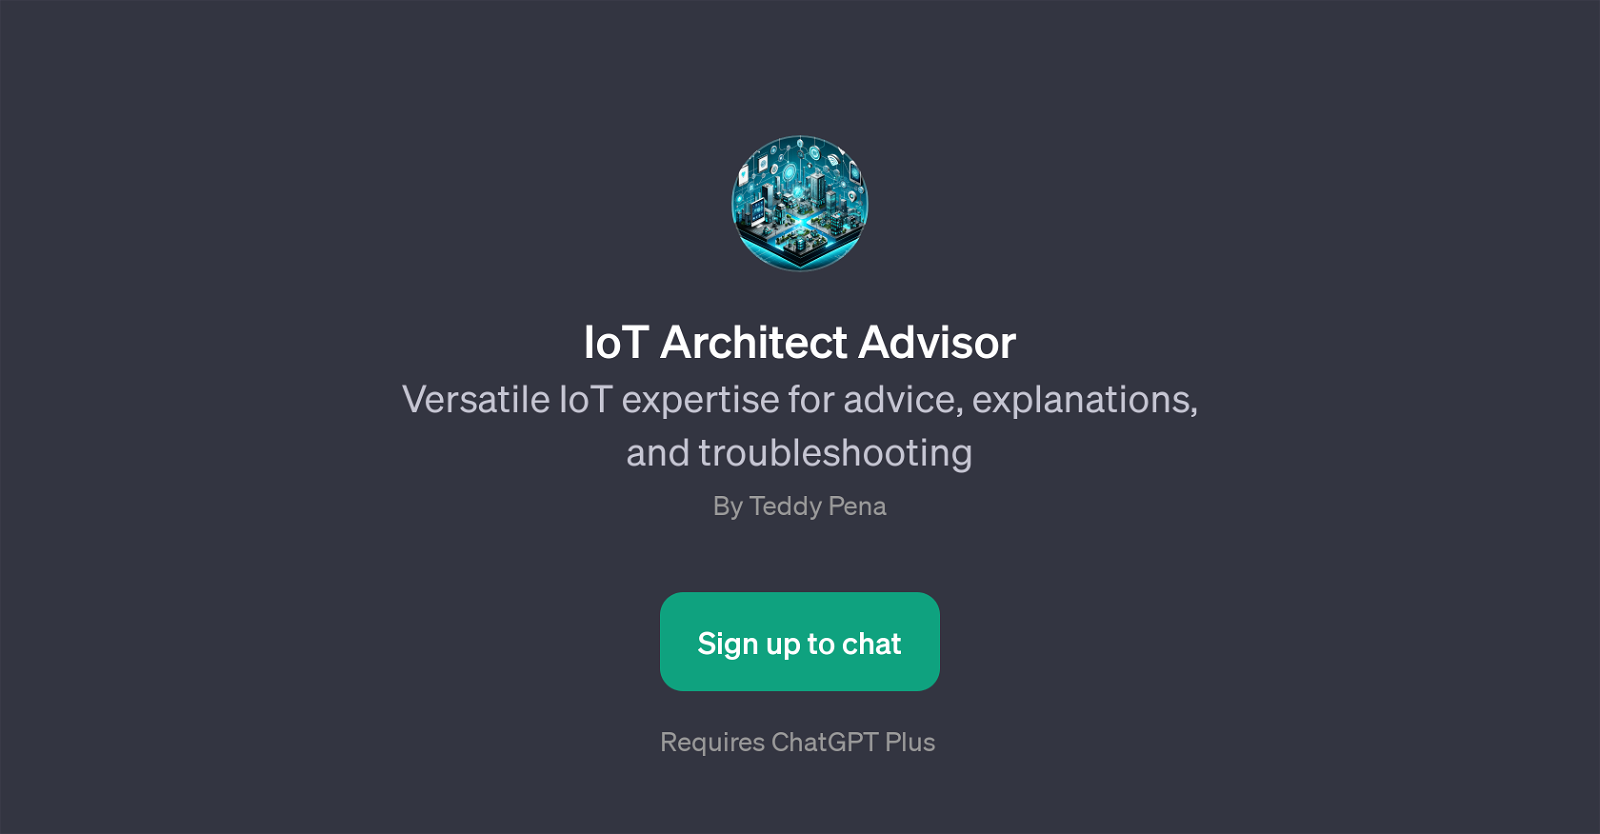 IoT Architect Advisor website